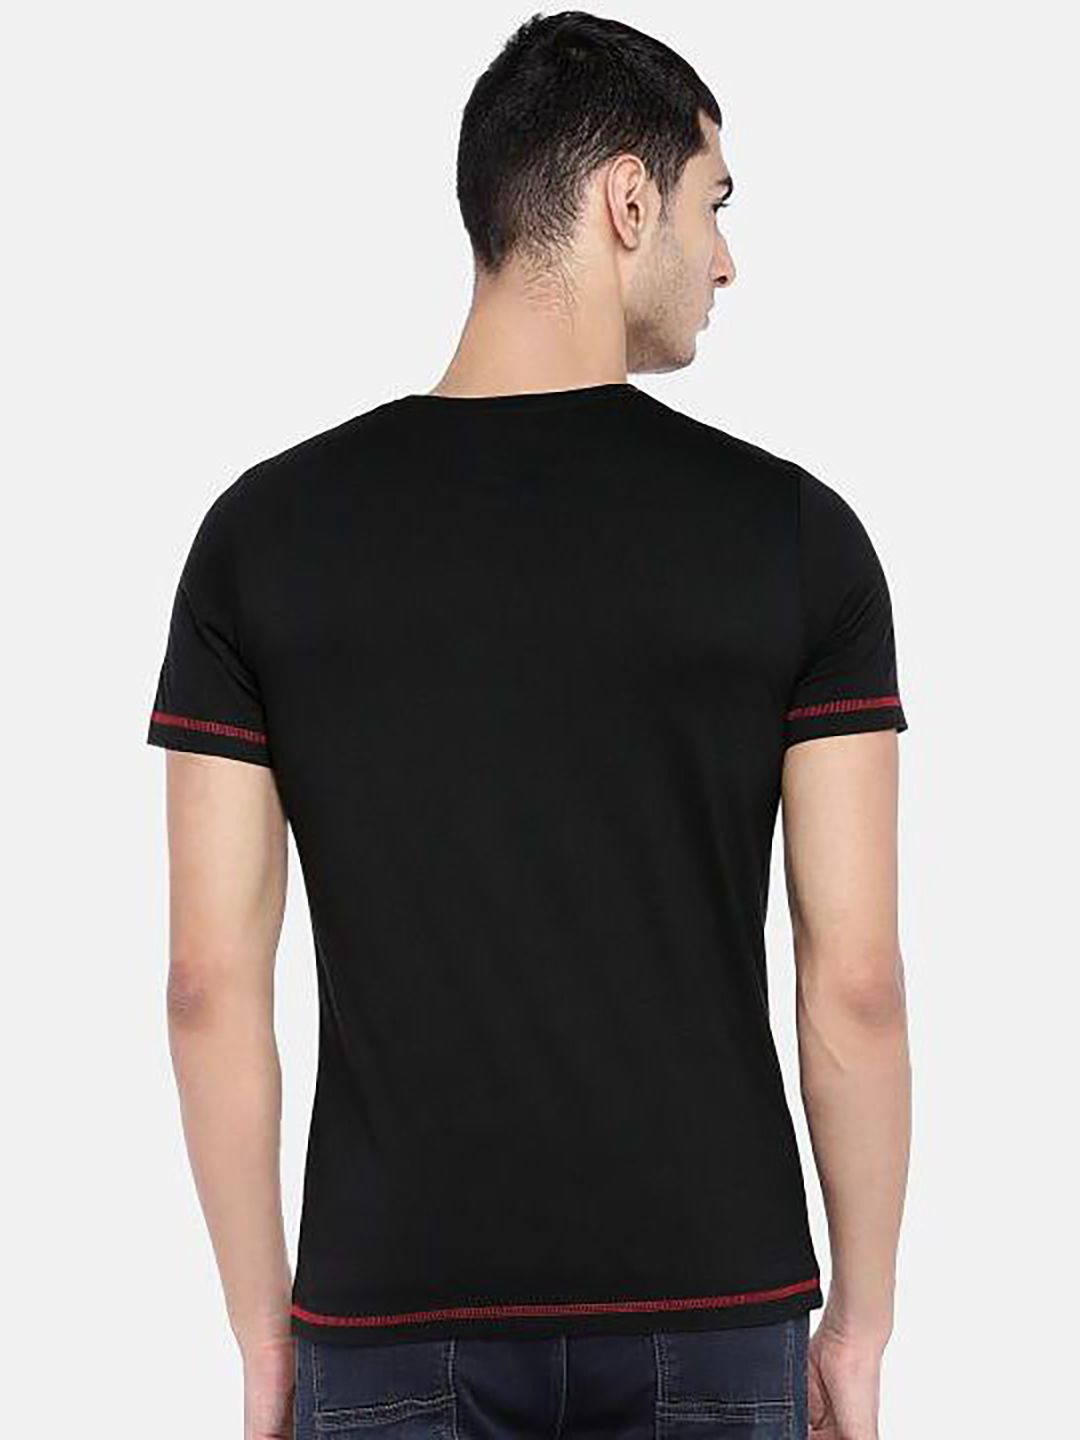 Buy Chicago Bulls NBA Baseball Jersey Black T-Shirt From Fancode Shop.